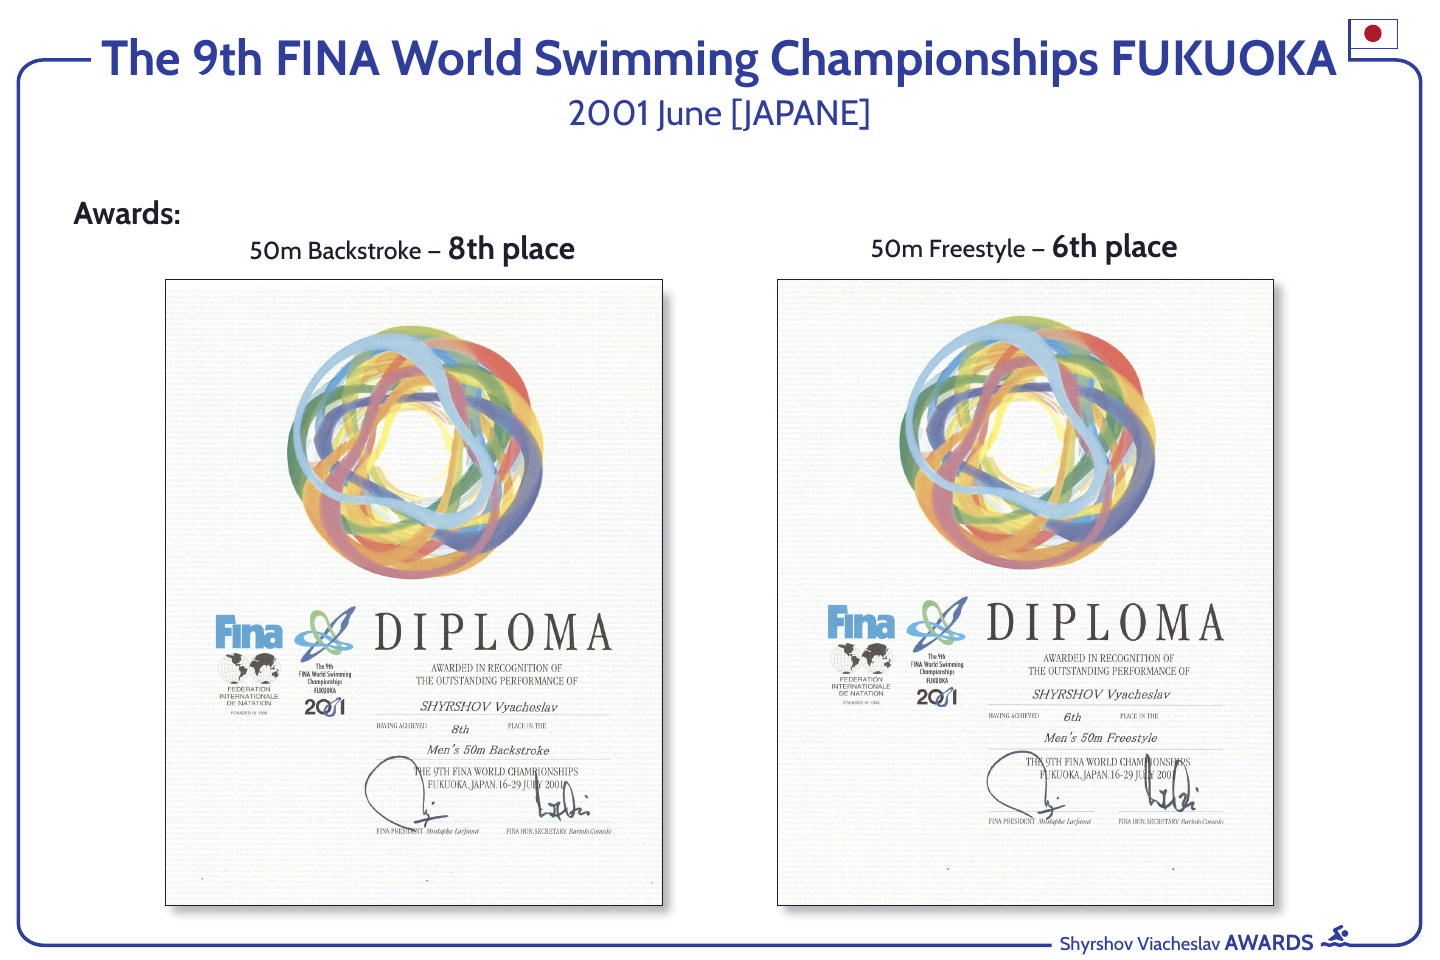 The 9th FINA World Swimming Championships FUKUOKA 2001